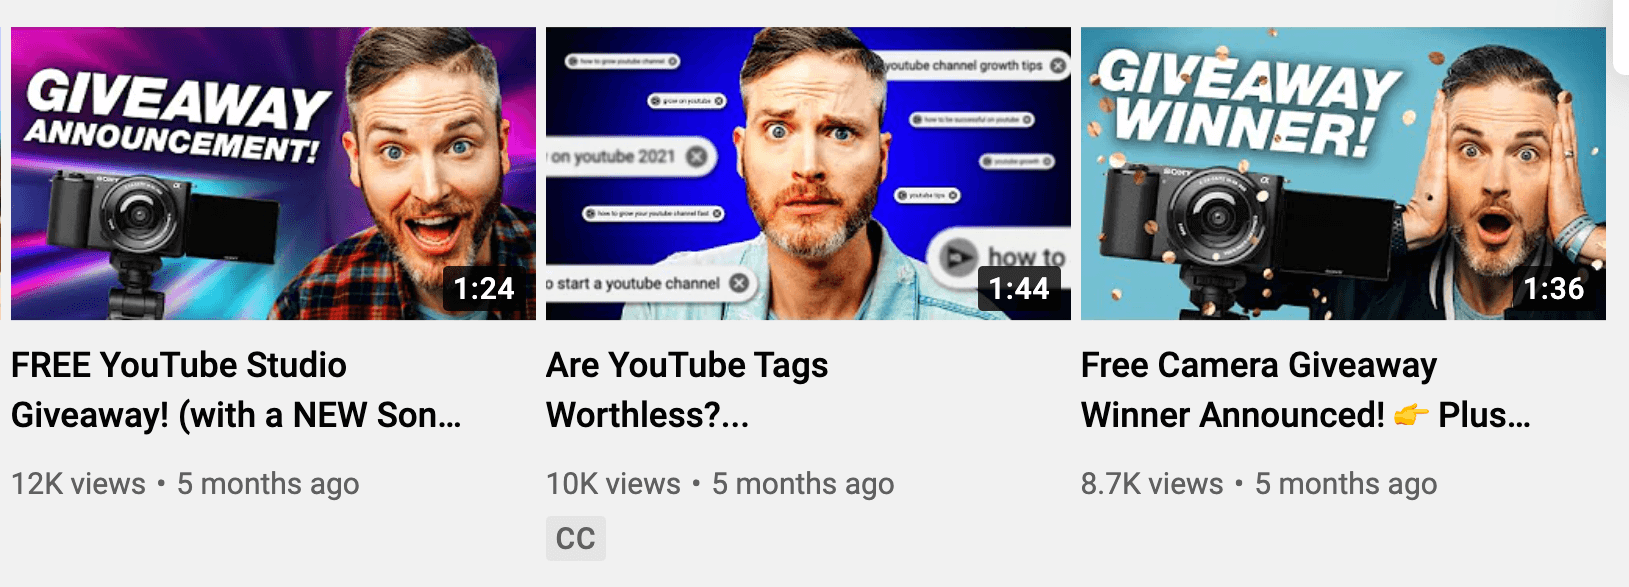 image of three YouTube video thumbnails showing emotion